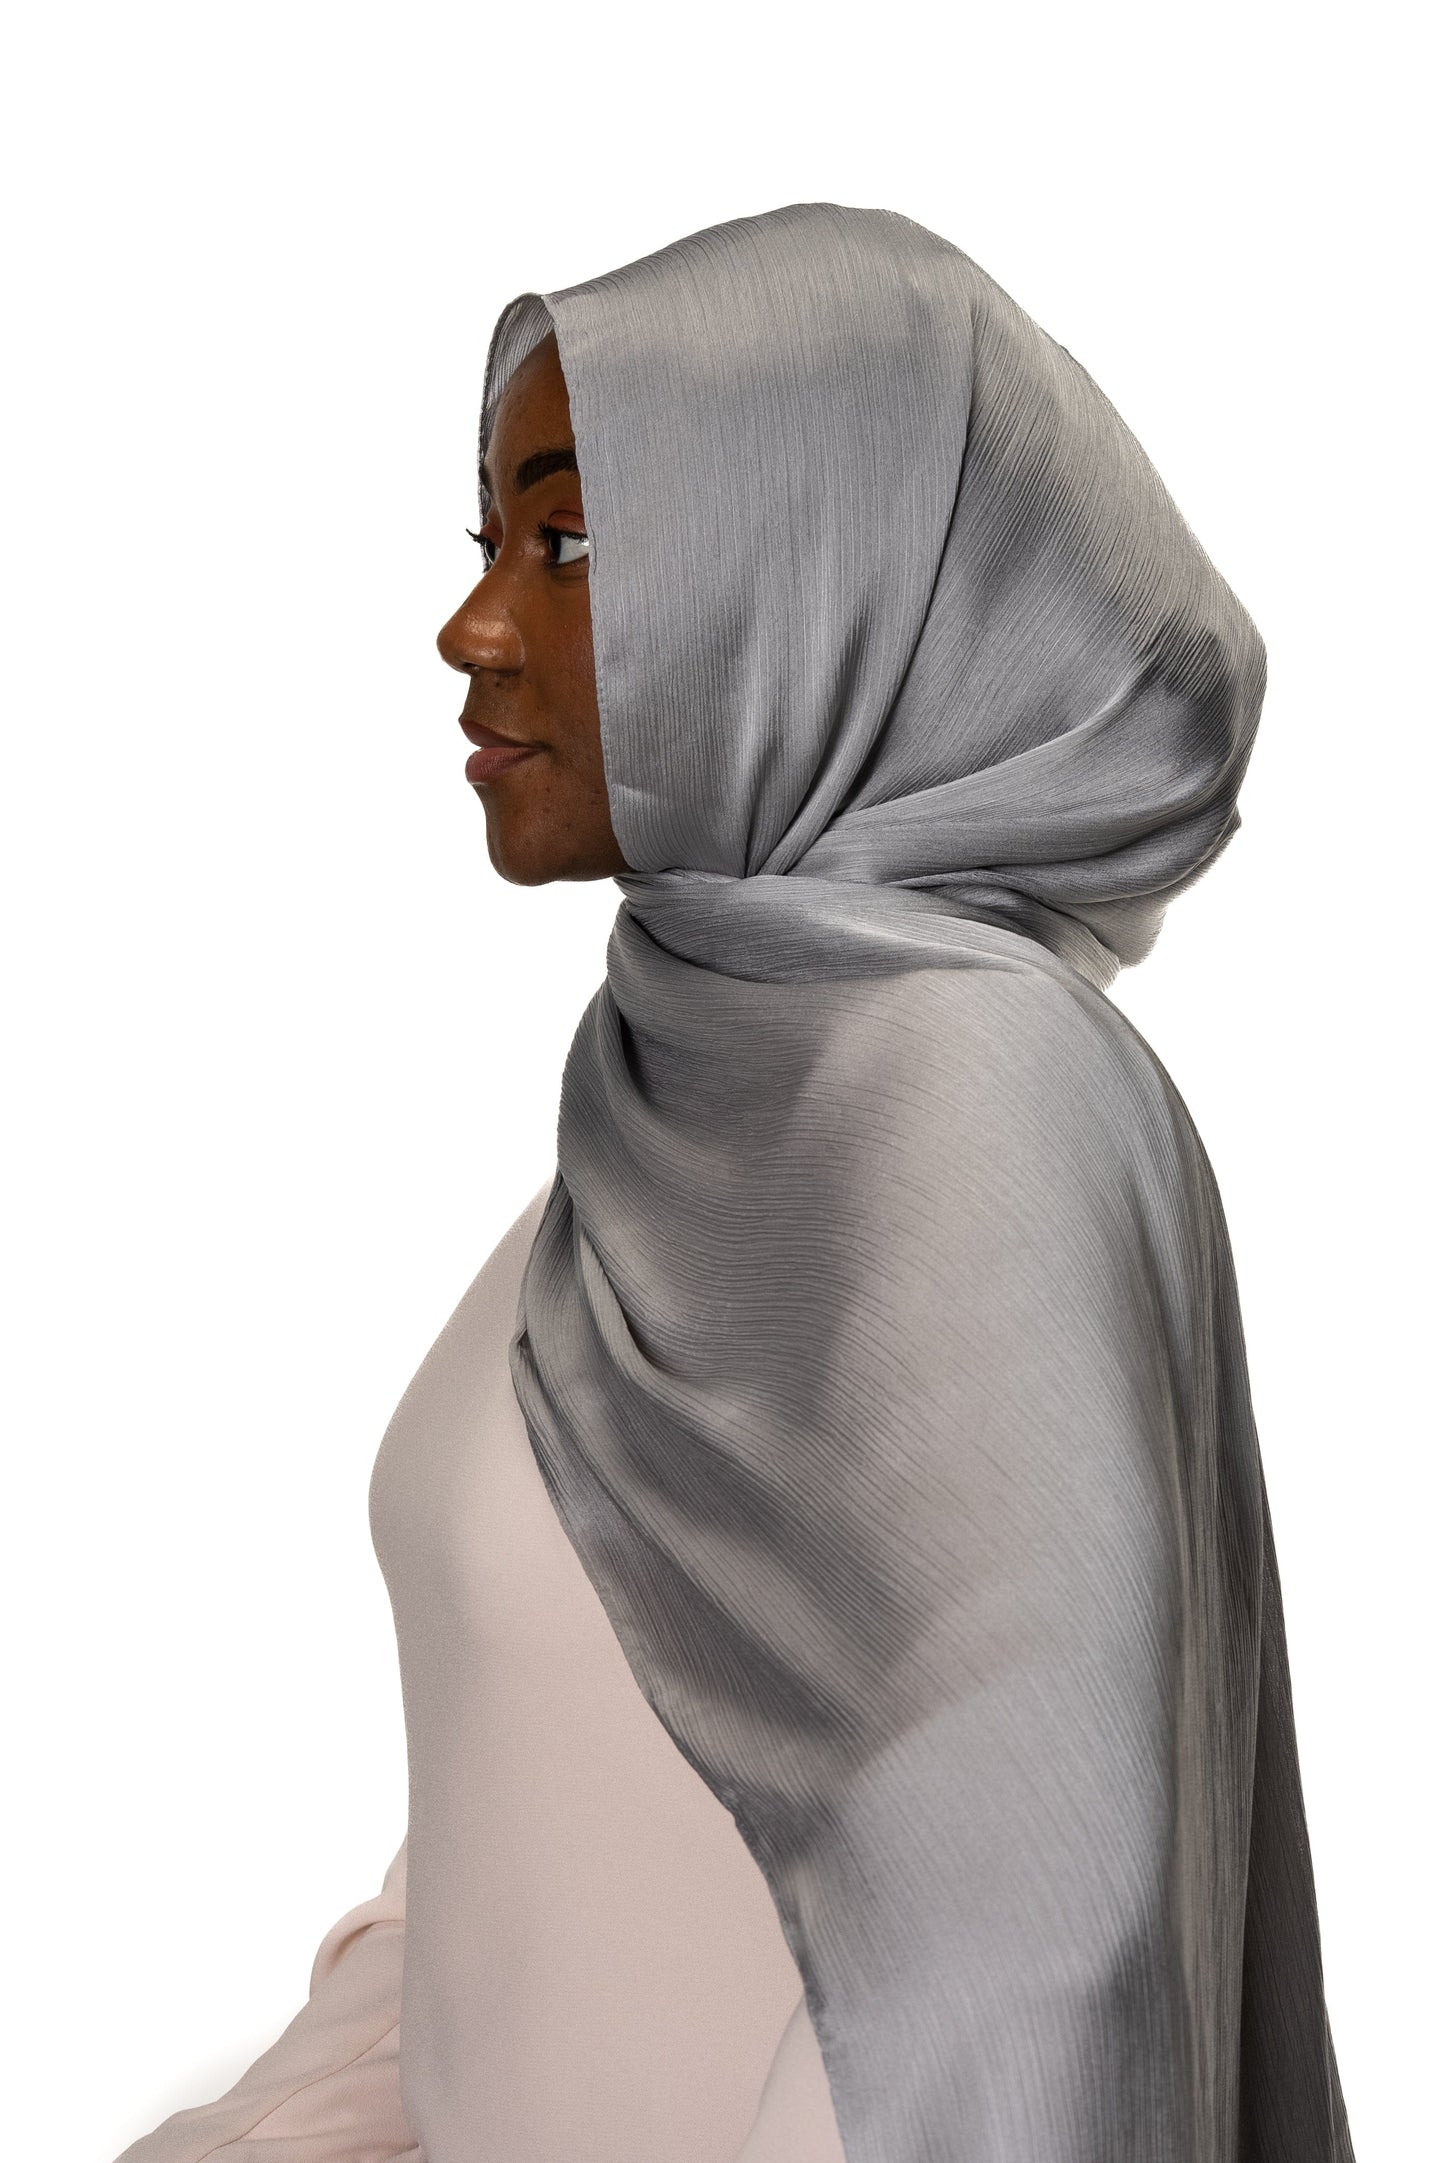 Jolie Nisa Hijab Jolie Nisa None Slip Premium Satin Crinkle Hijab Scarf Your Style with Jolie Nisa None Slip Premium Satin Crinkle Hijab Scarf